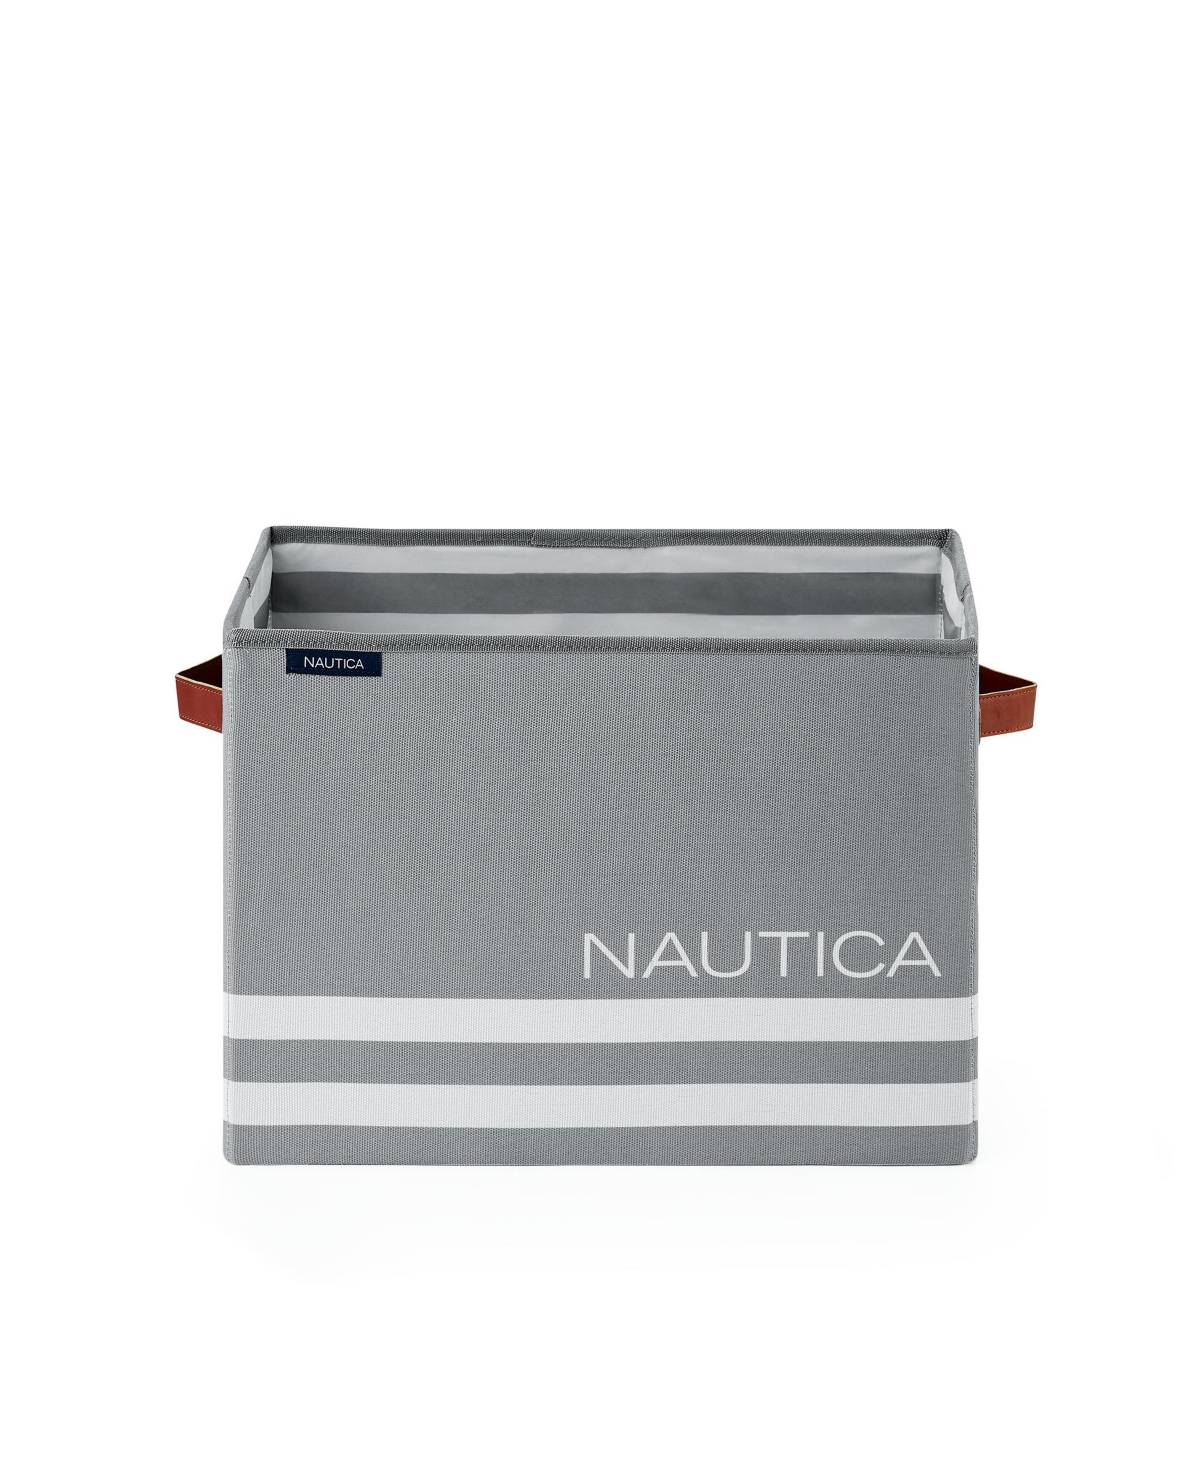 Nautica Folded Hamper With Lid Box Weave In Gray Stripe